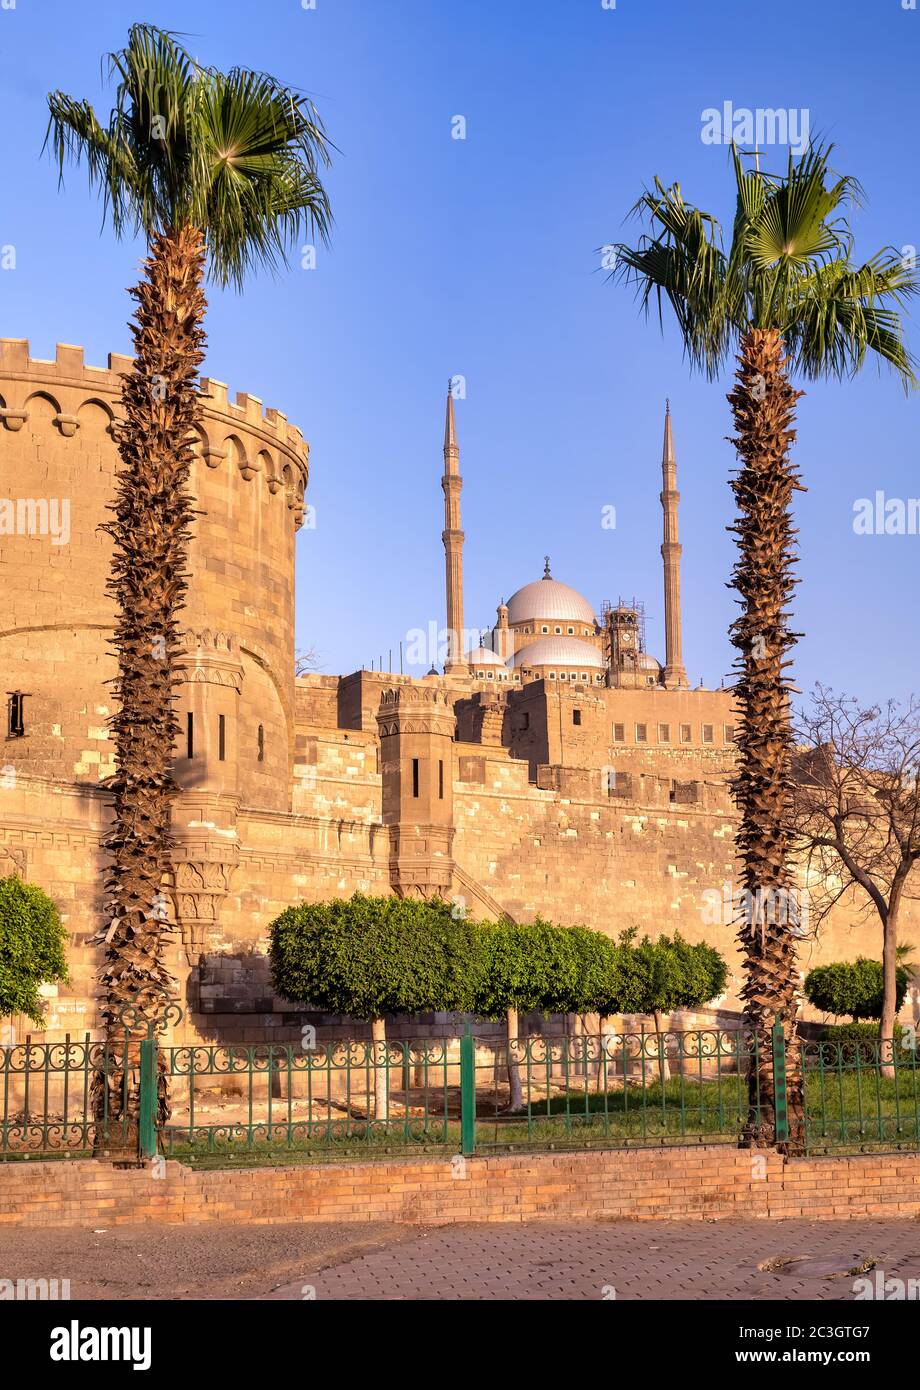 Mezquita de la Ciudadela de Saladino, Plaza Salah el-Deen, el Cairo, Egipto Foto de stock